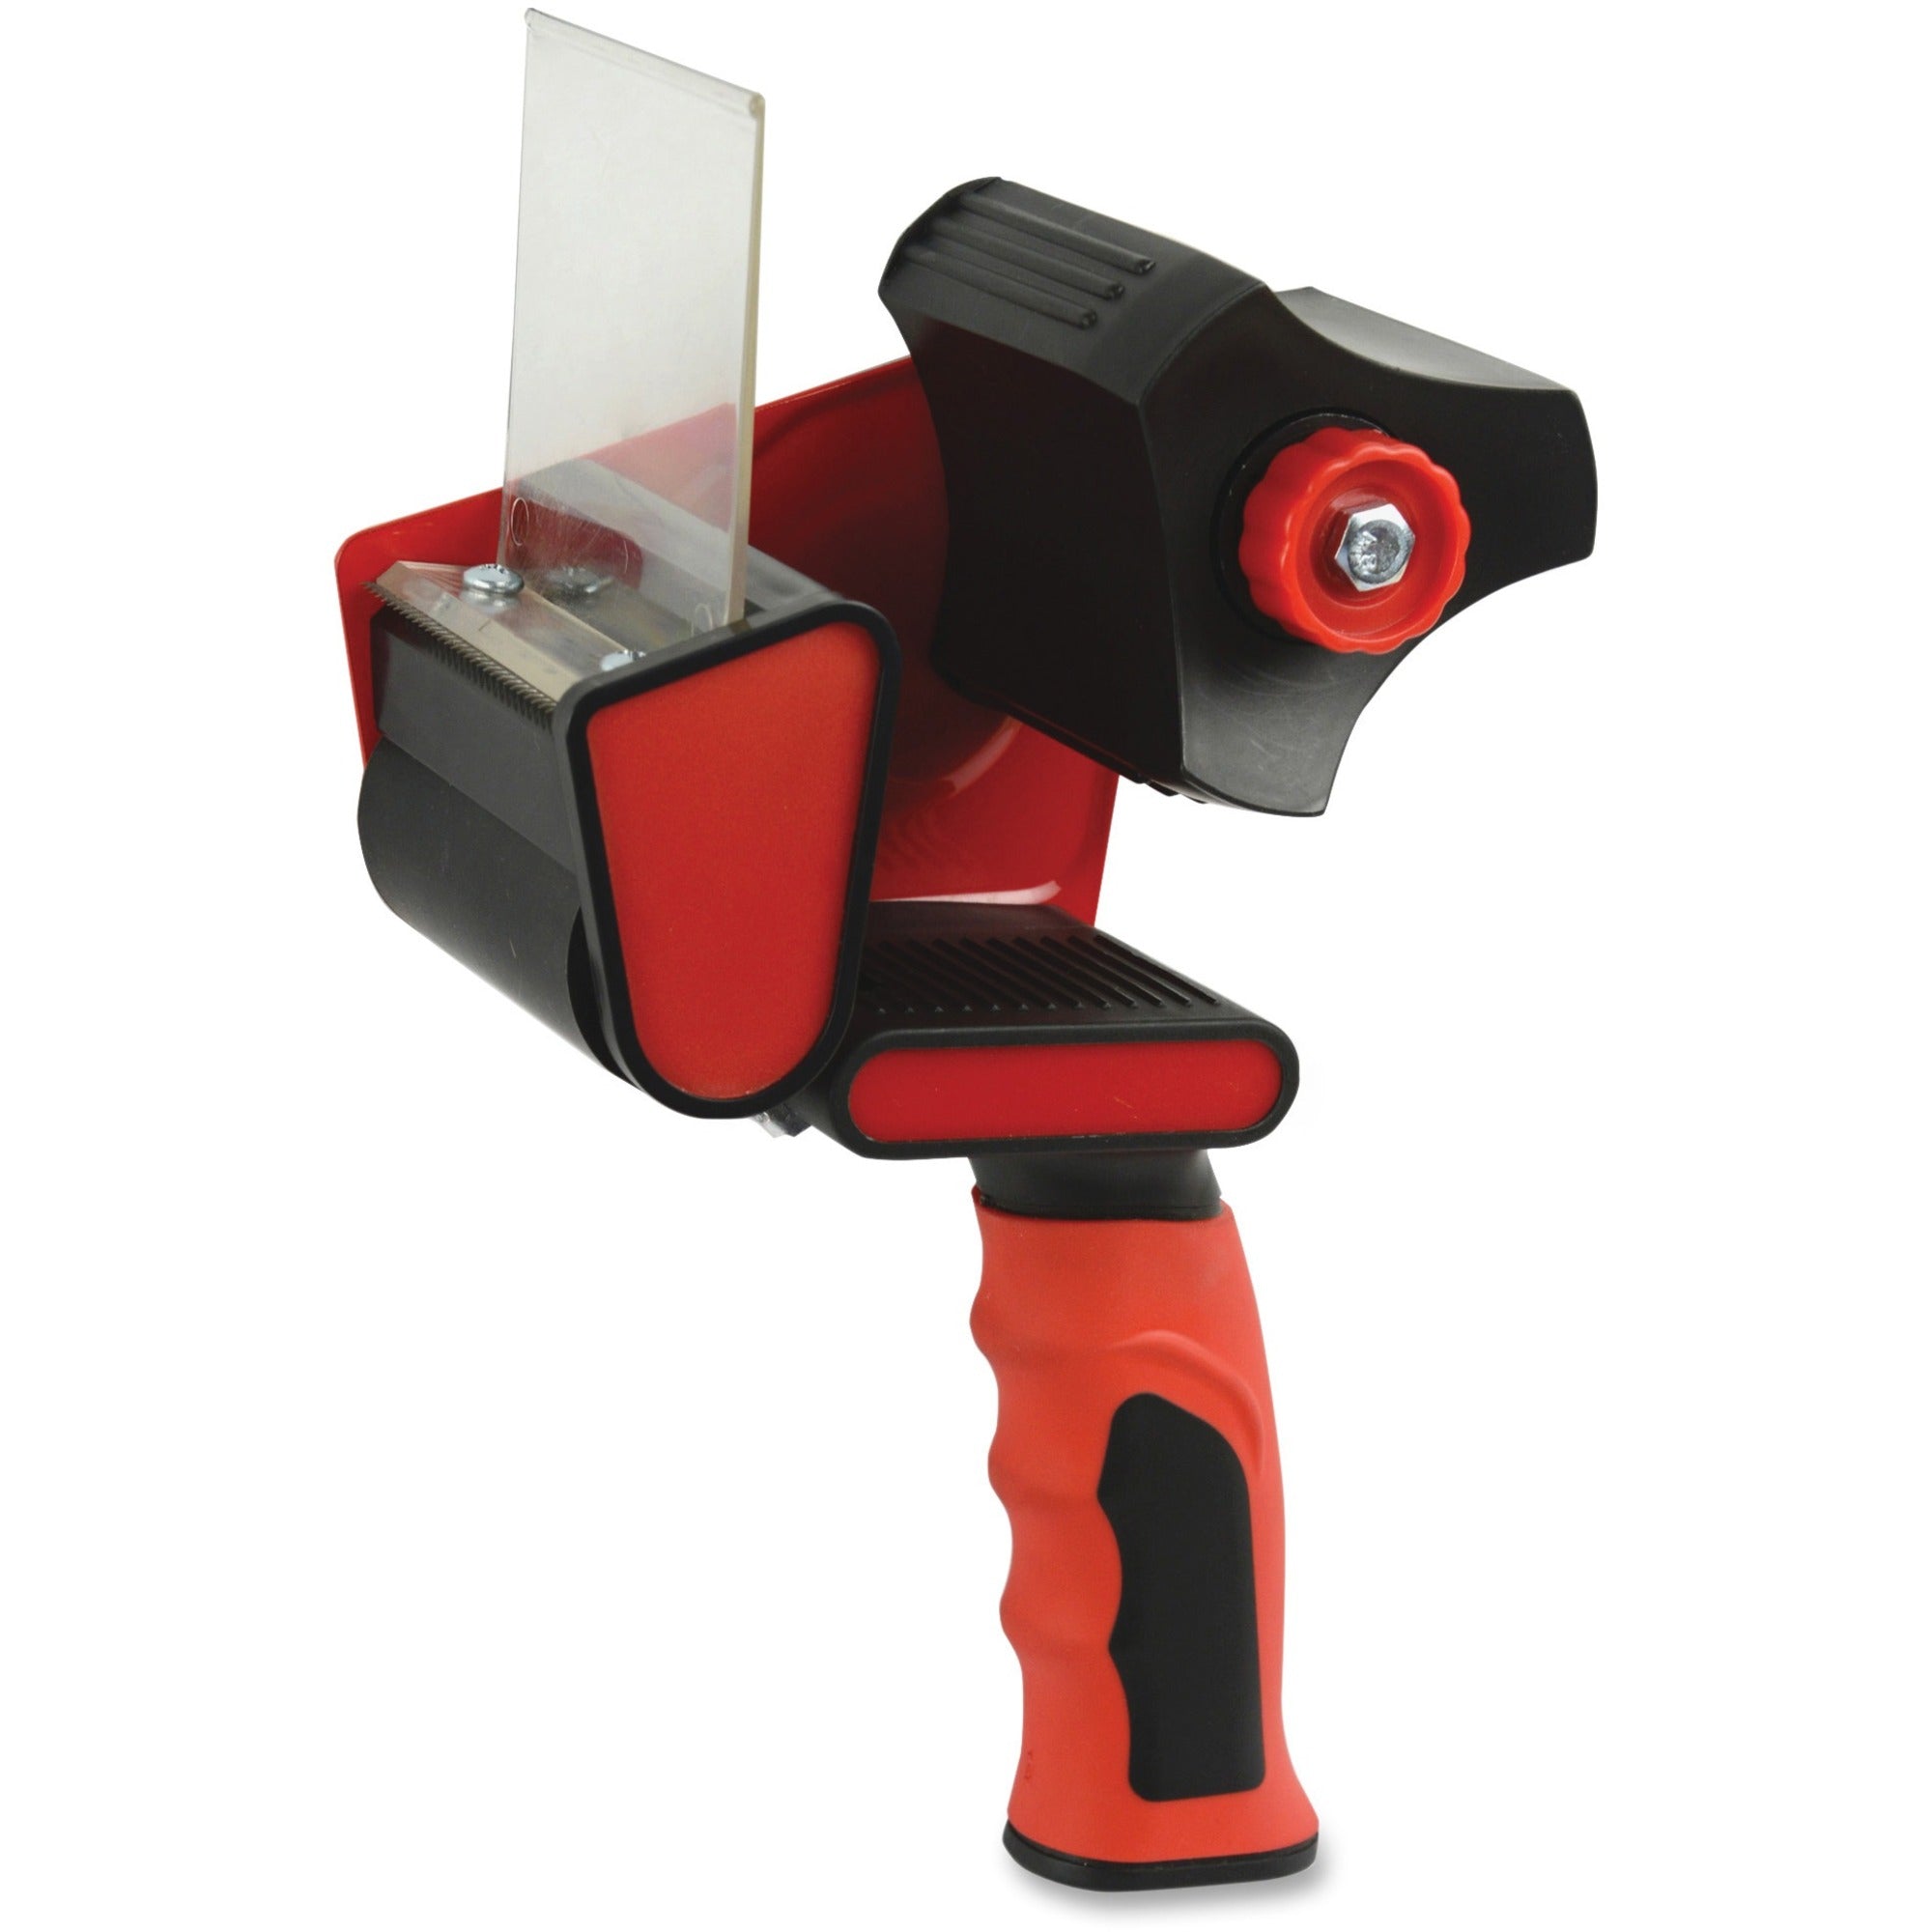 Sparco 3" Packaging Tape Dispenser - 3" Core - Ergonomic Design, Adjustable Tension Mechanism, Durable - Red, Black - 1 Each - 